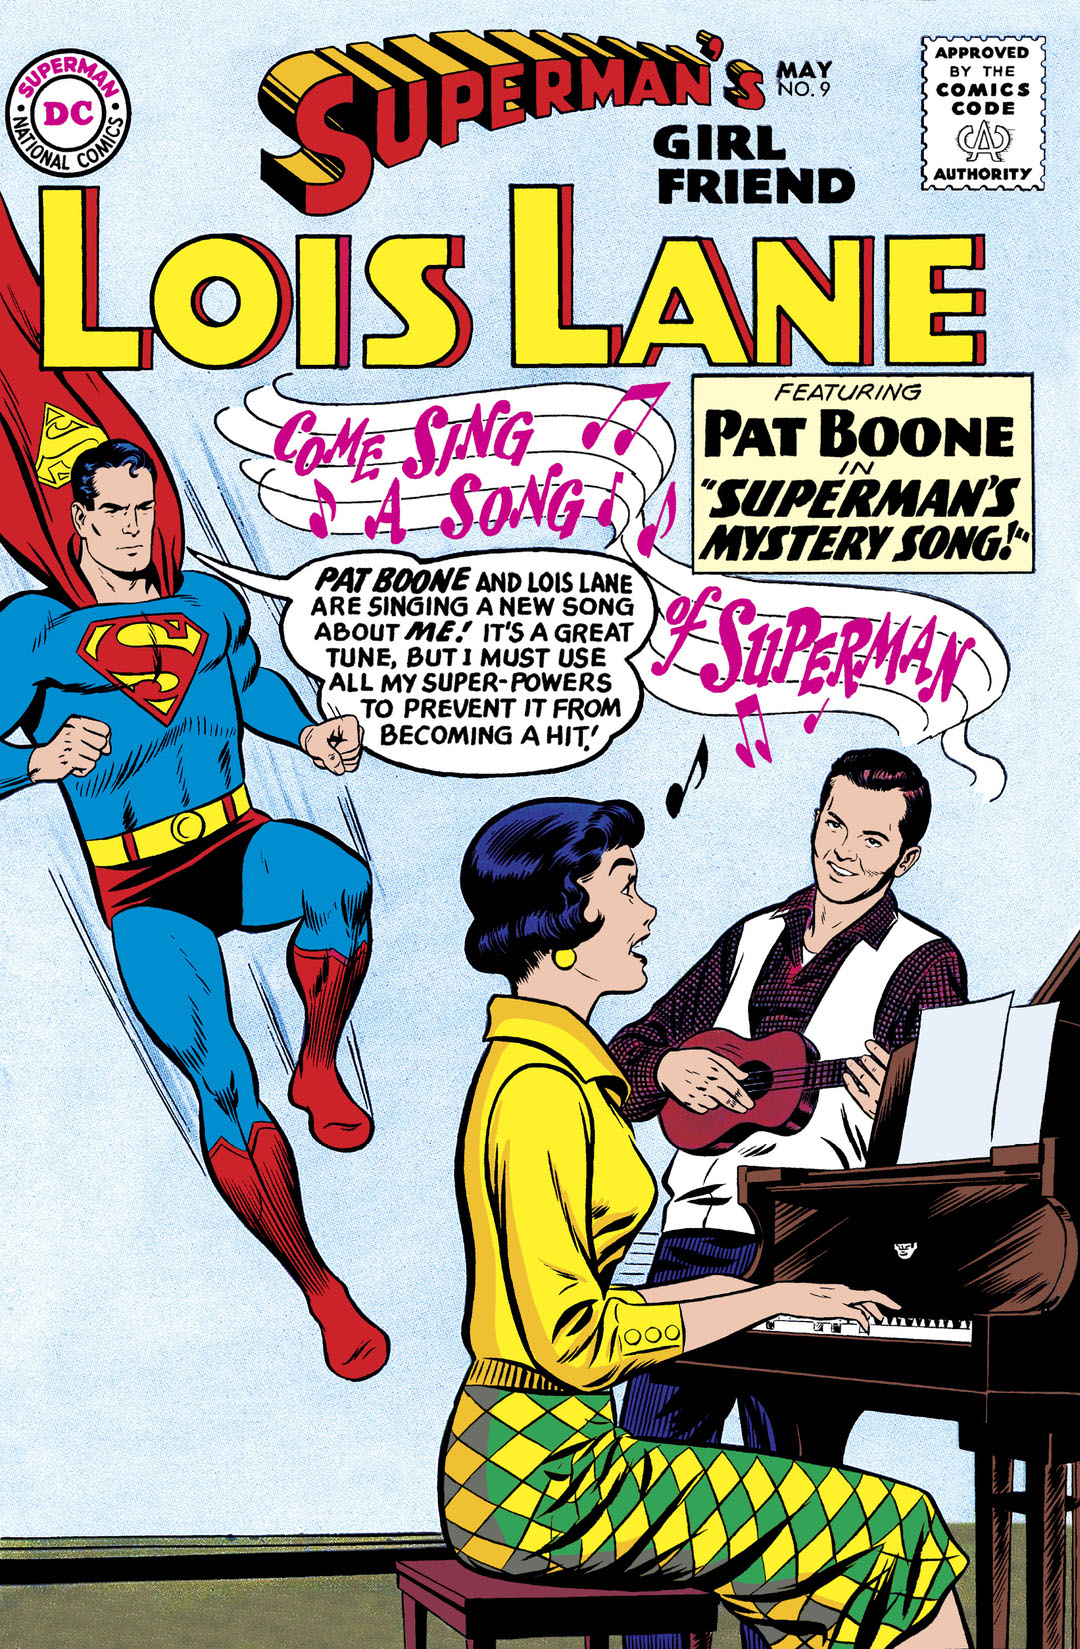 Superman's Girl Friend Lois Lane #9 preview images